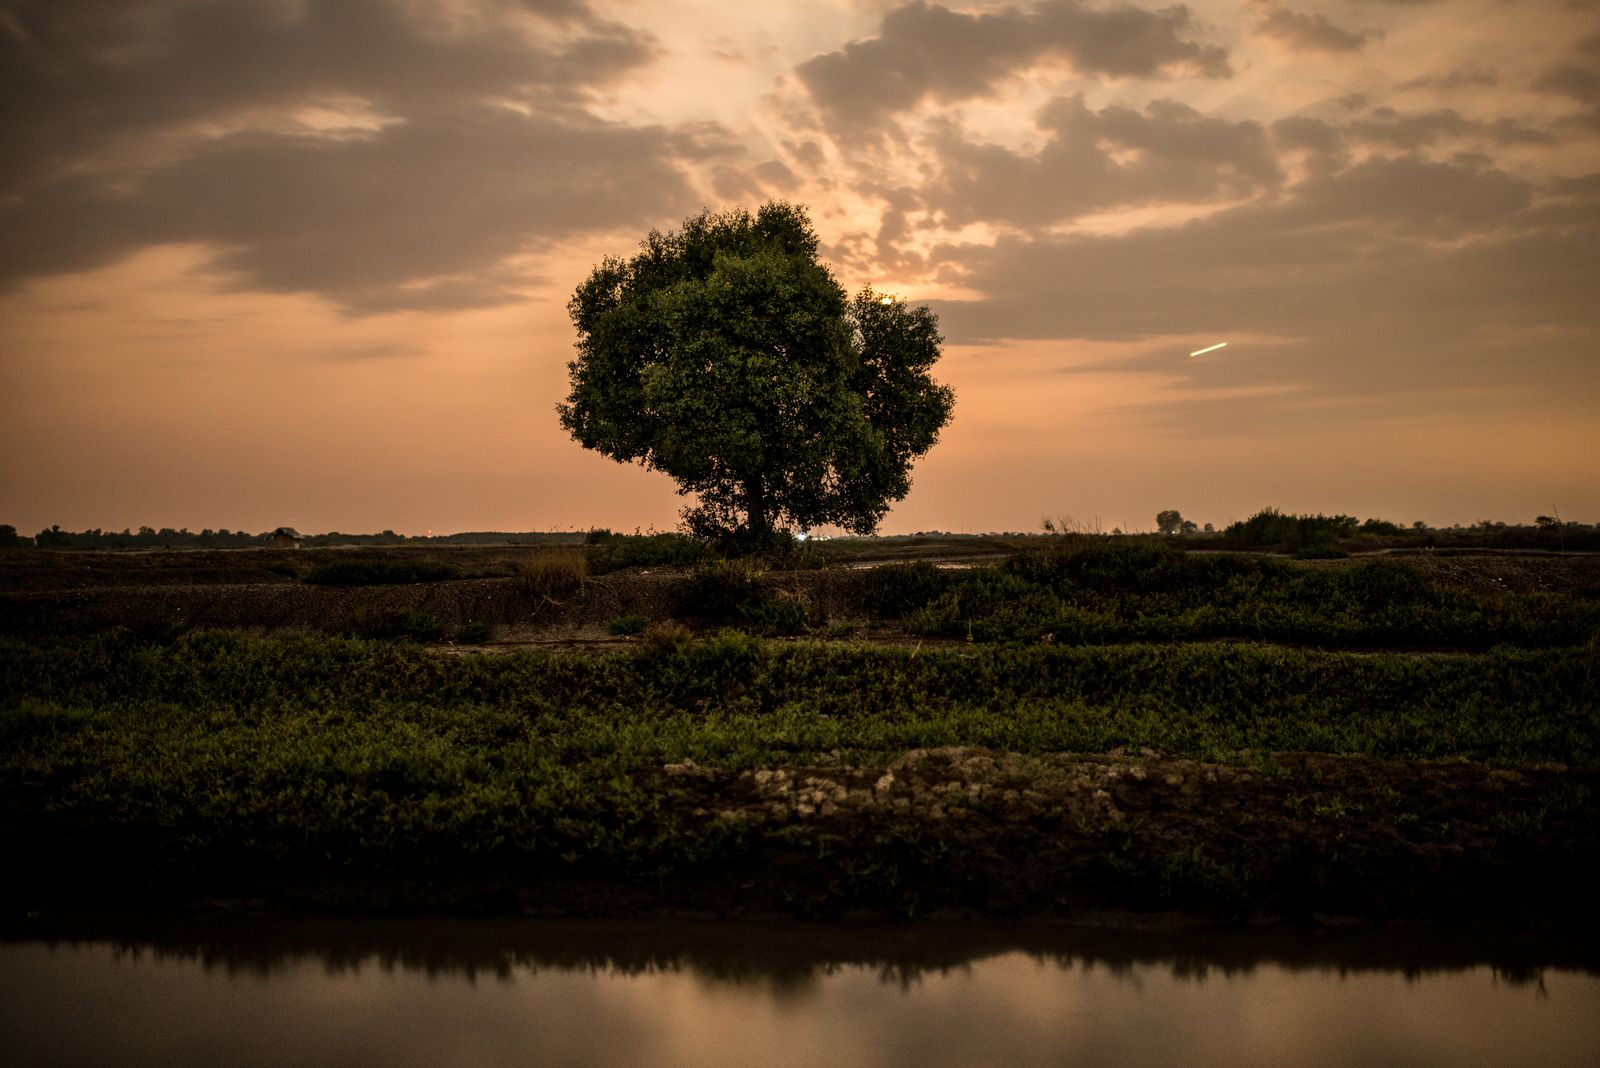 © Elisabetta Zavoli - Image from the The tree of life photography project